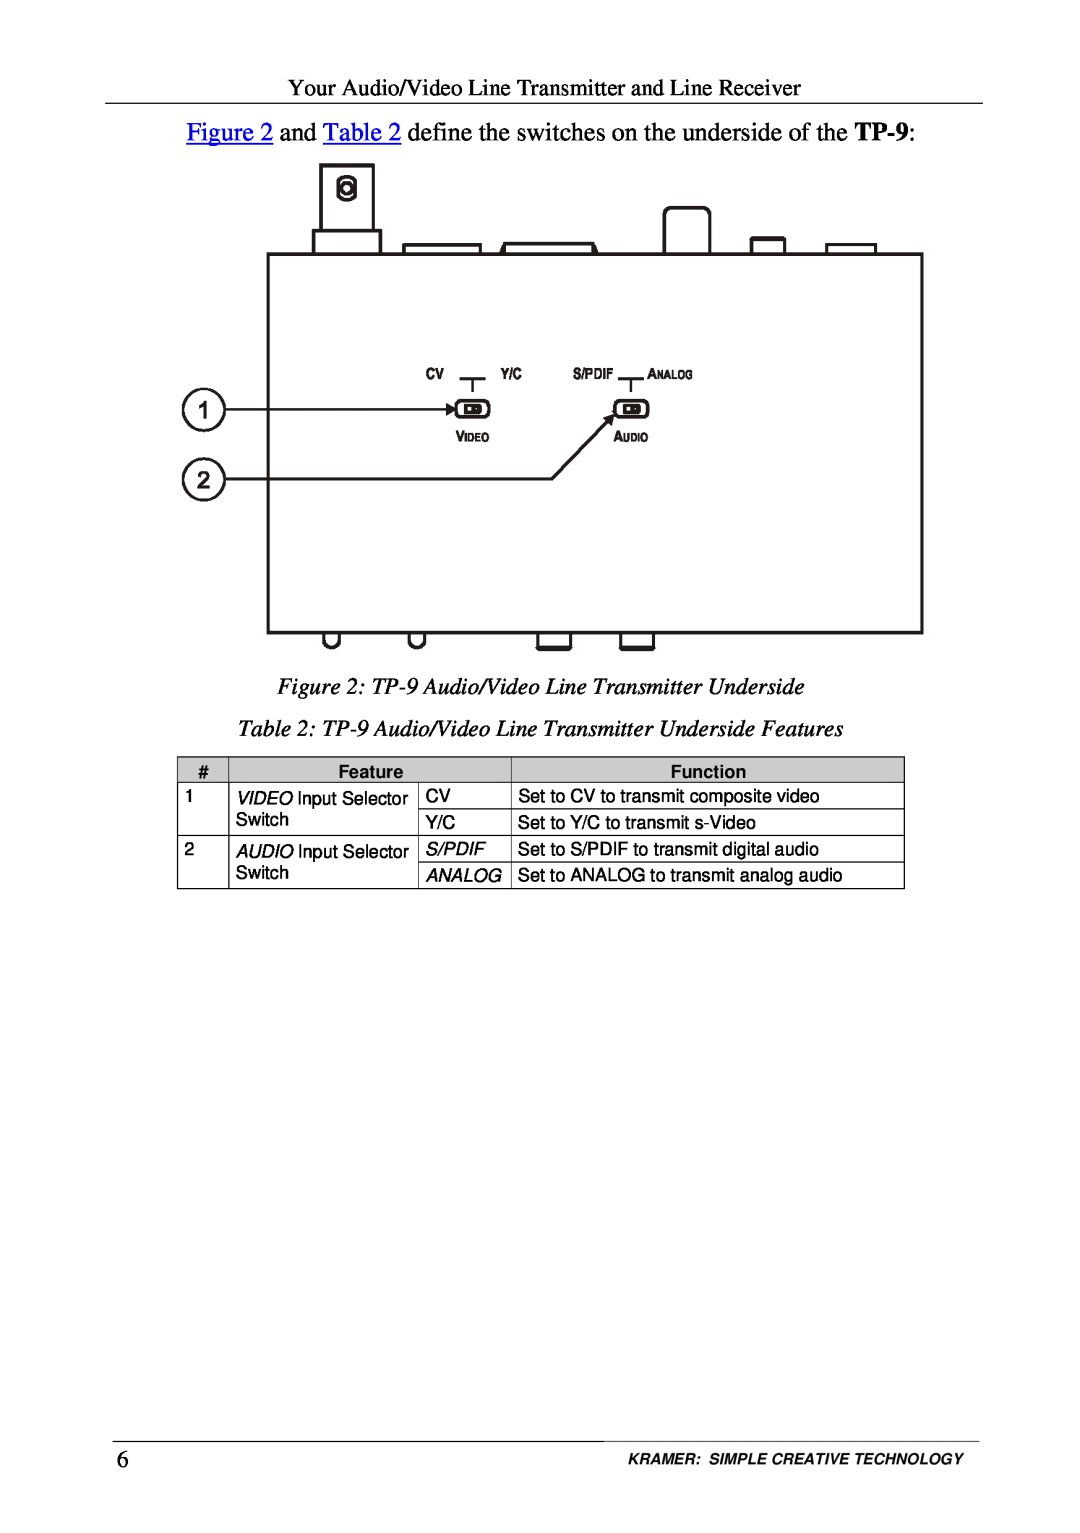 Kramer Electronics user manual TP-9 Audio/Video Line Transmitter Underside Features, Function, S/Pdif, Analog 